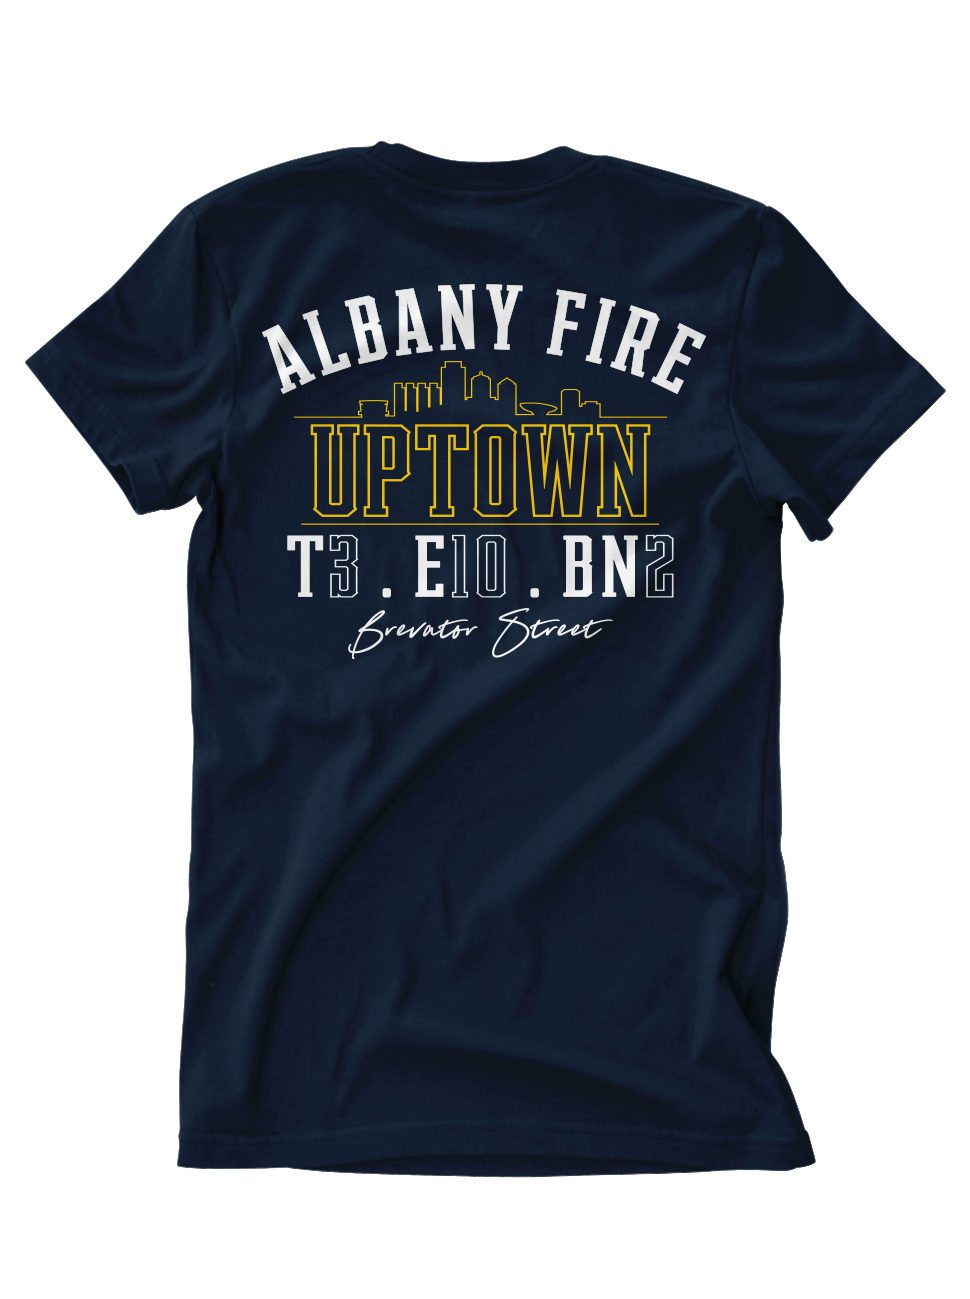 Albany Fire E10 T3 BN2 TTGFX August 18 Shirt Club Tee